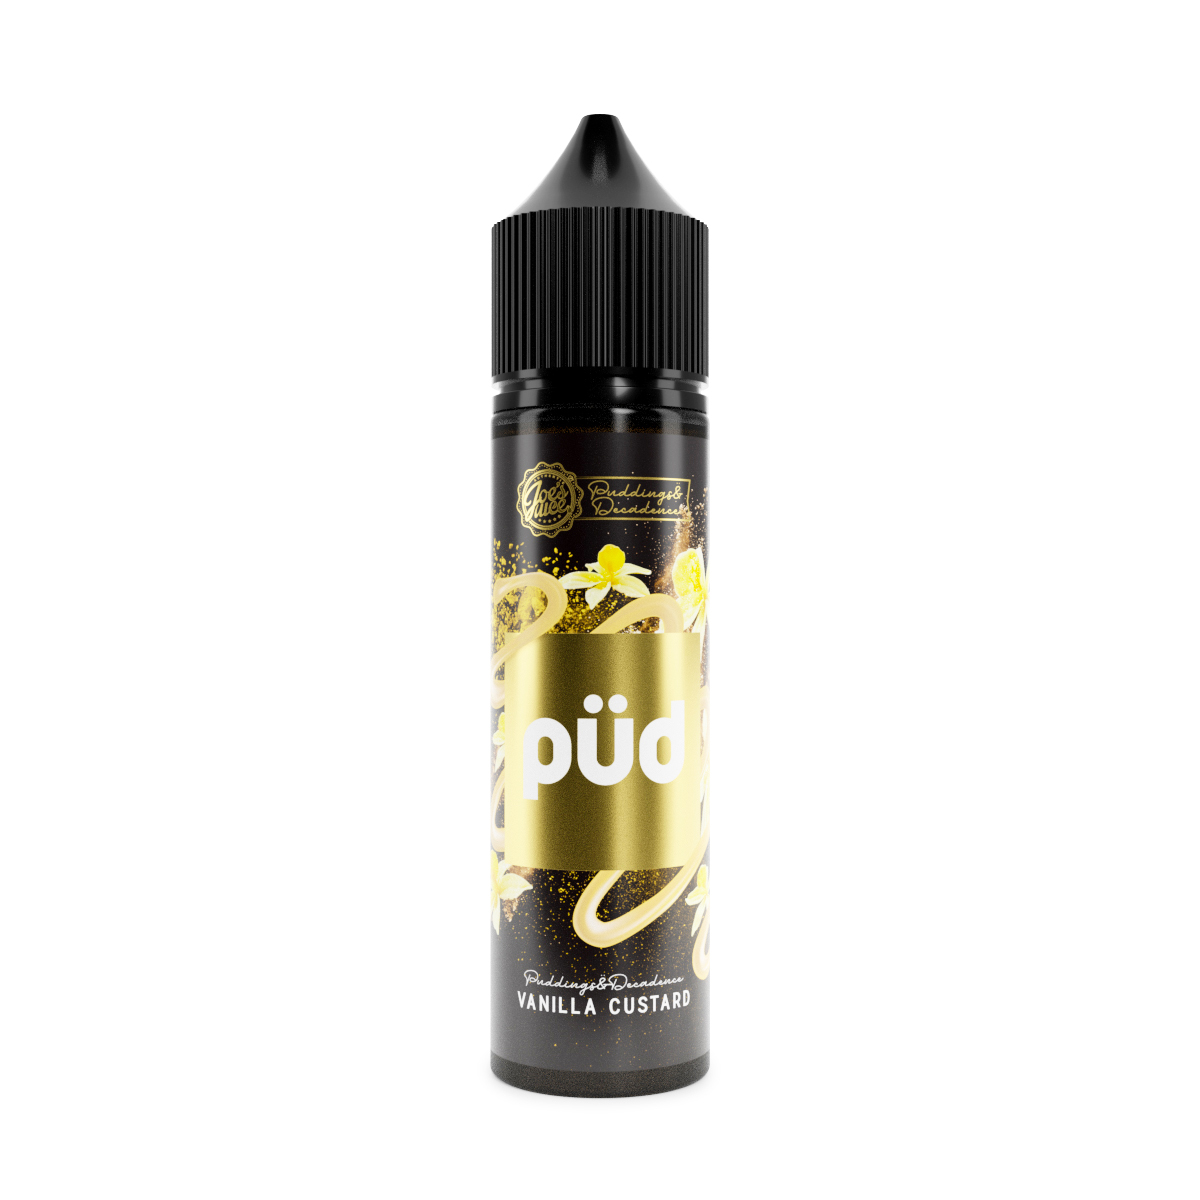 PUD - Vanilla Custard Flavour Concentrate by Joe's Juice